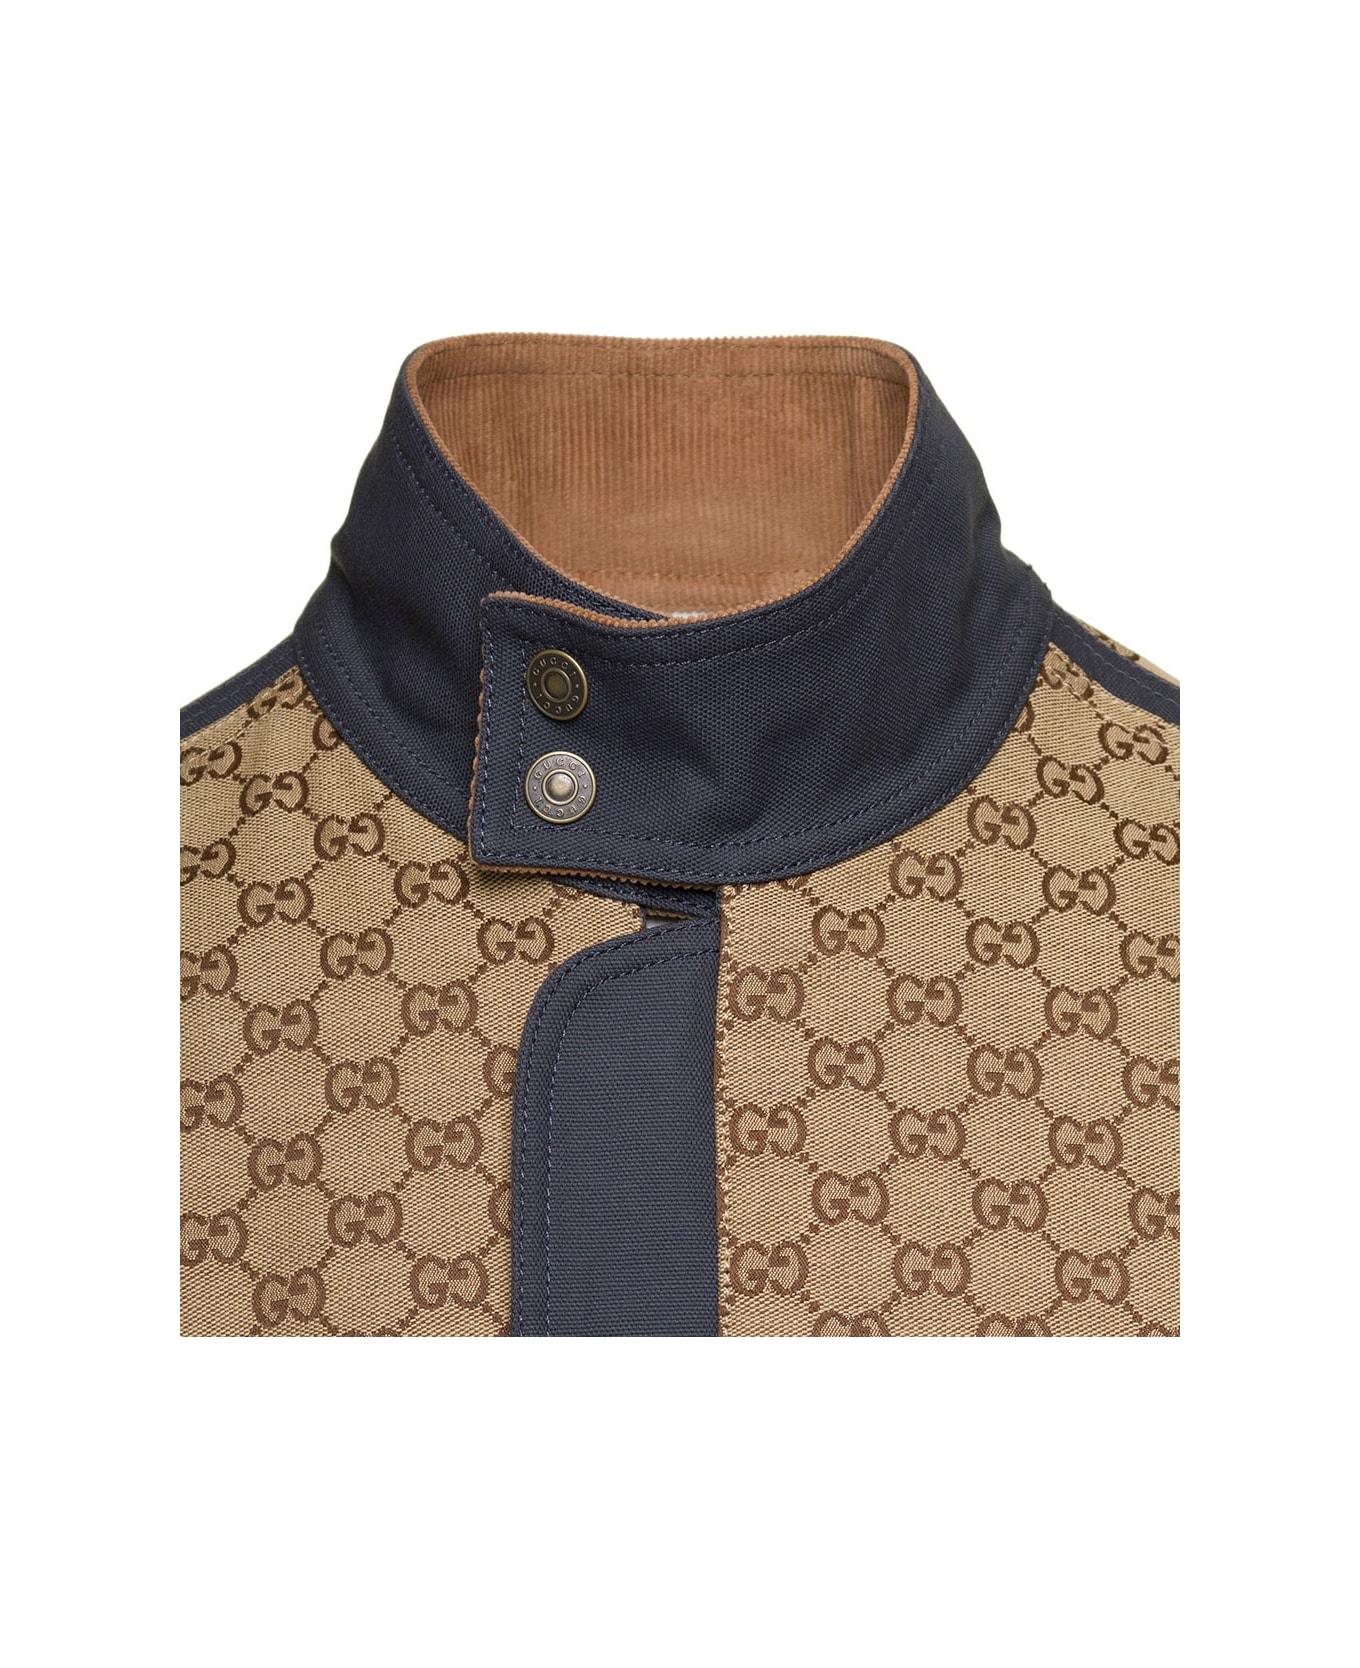 Gucci Monogram Jacket - Grey ジャケット